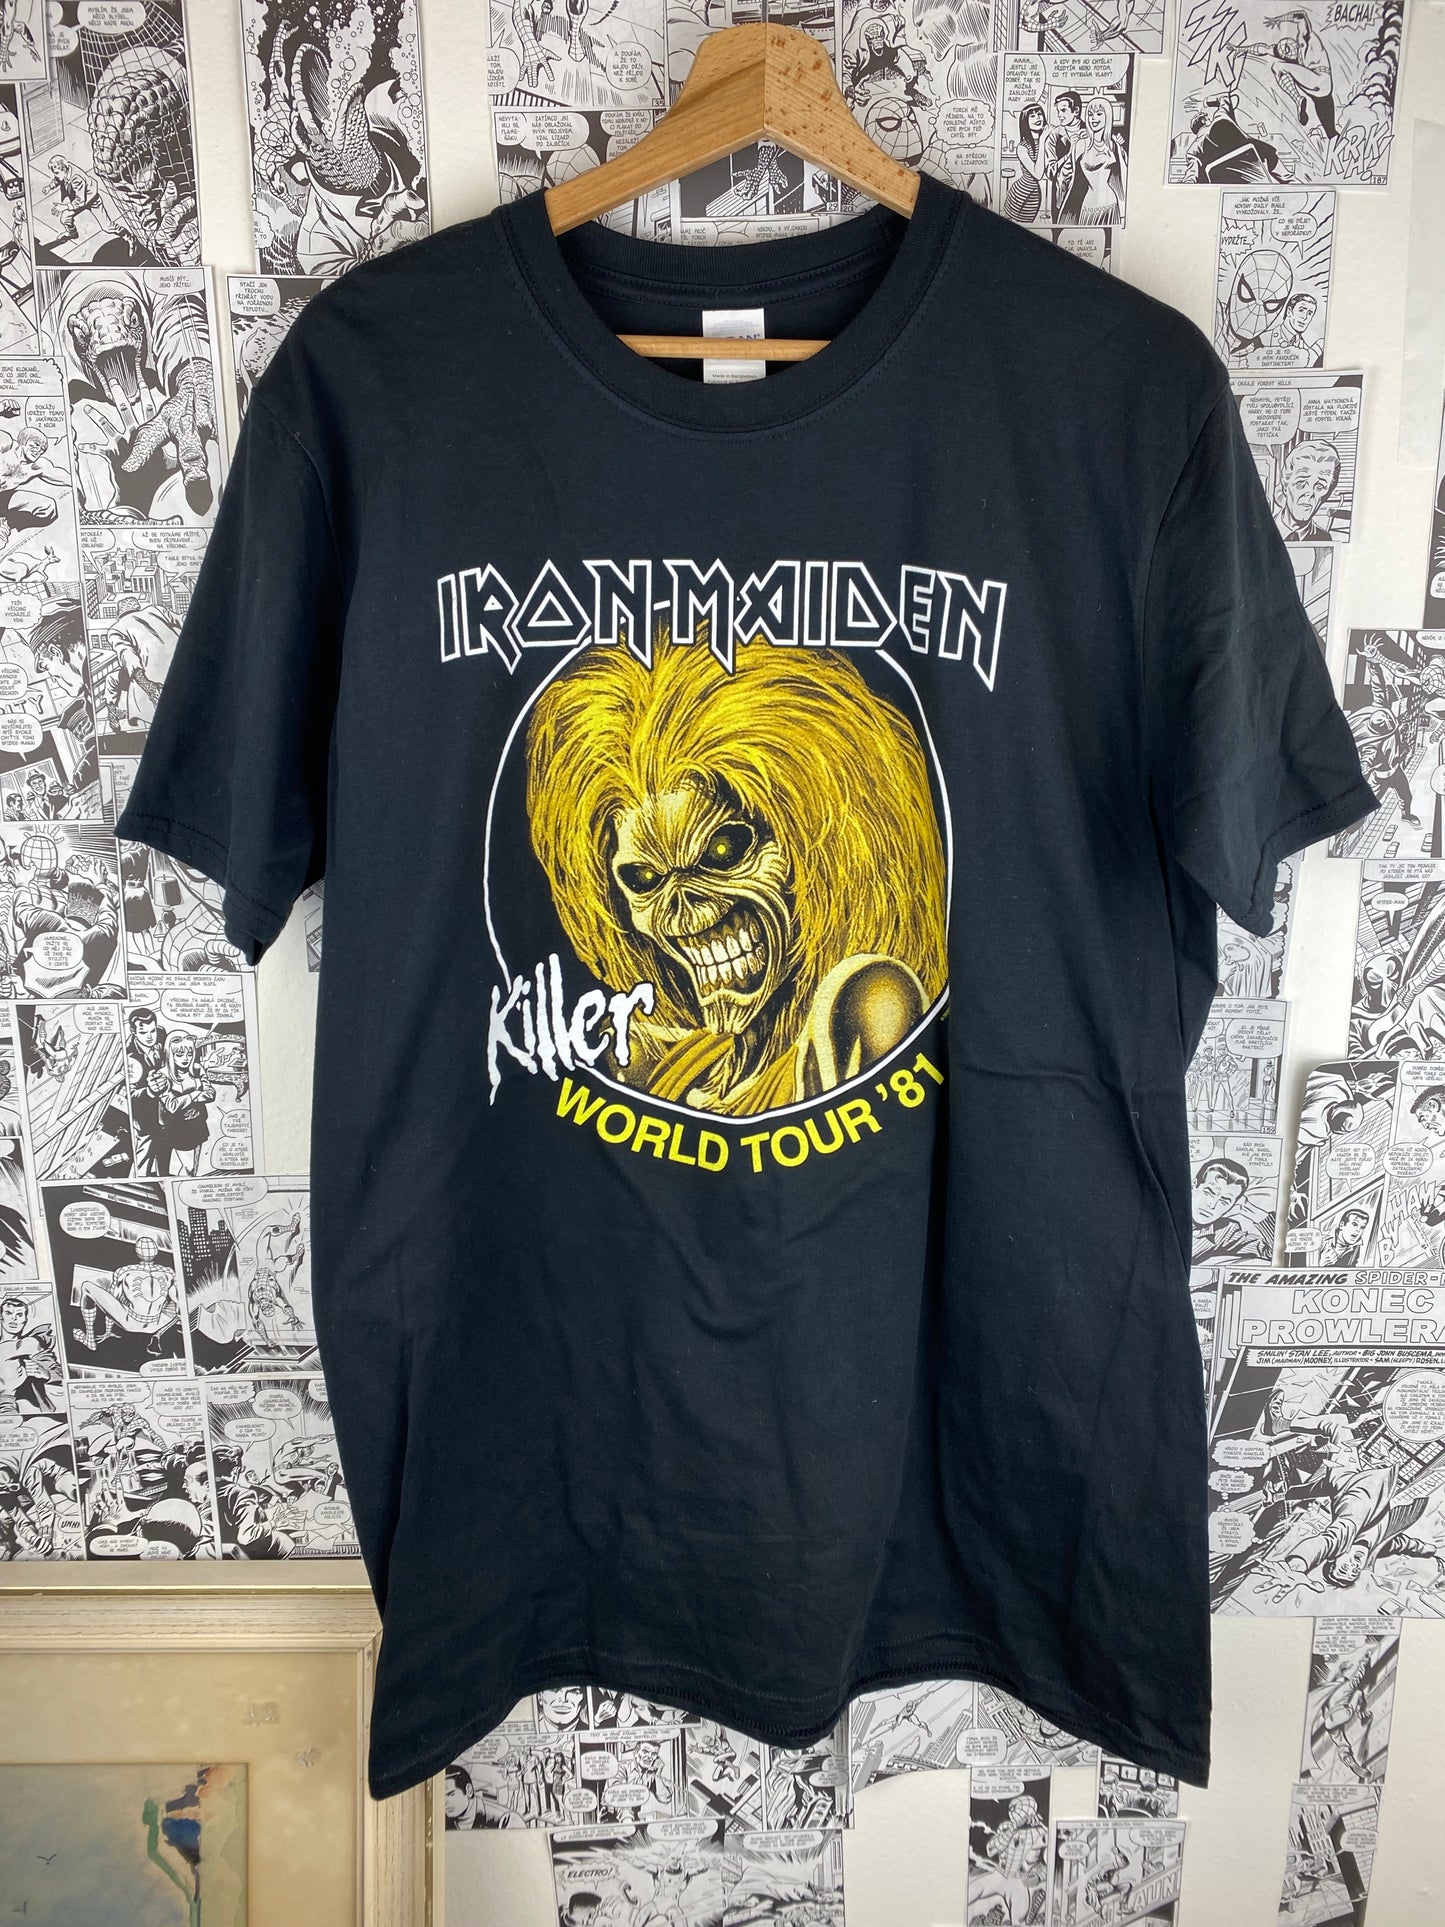 Vintage Iron Maiden “Killers” 00s t-shirt - size L